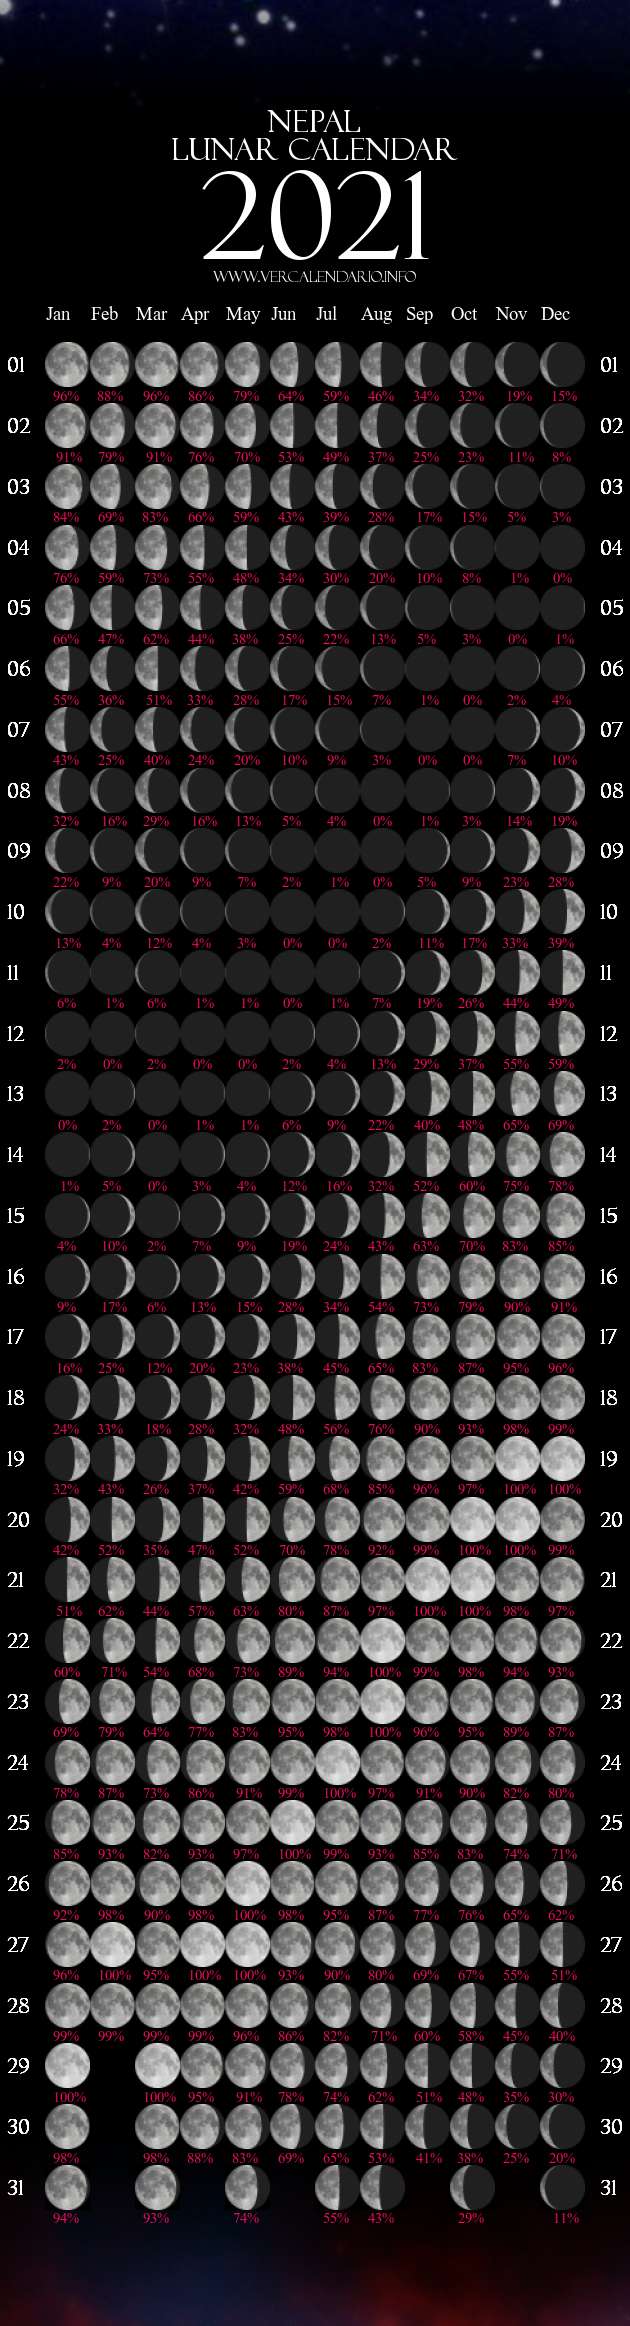 Lunar Calendar 2021 (Nepal)